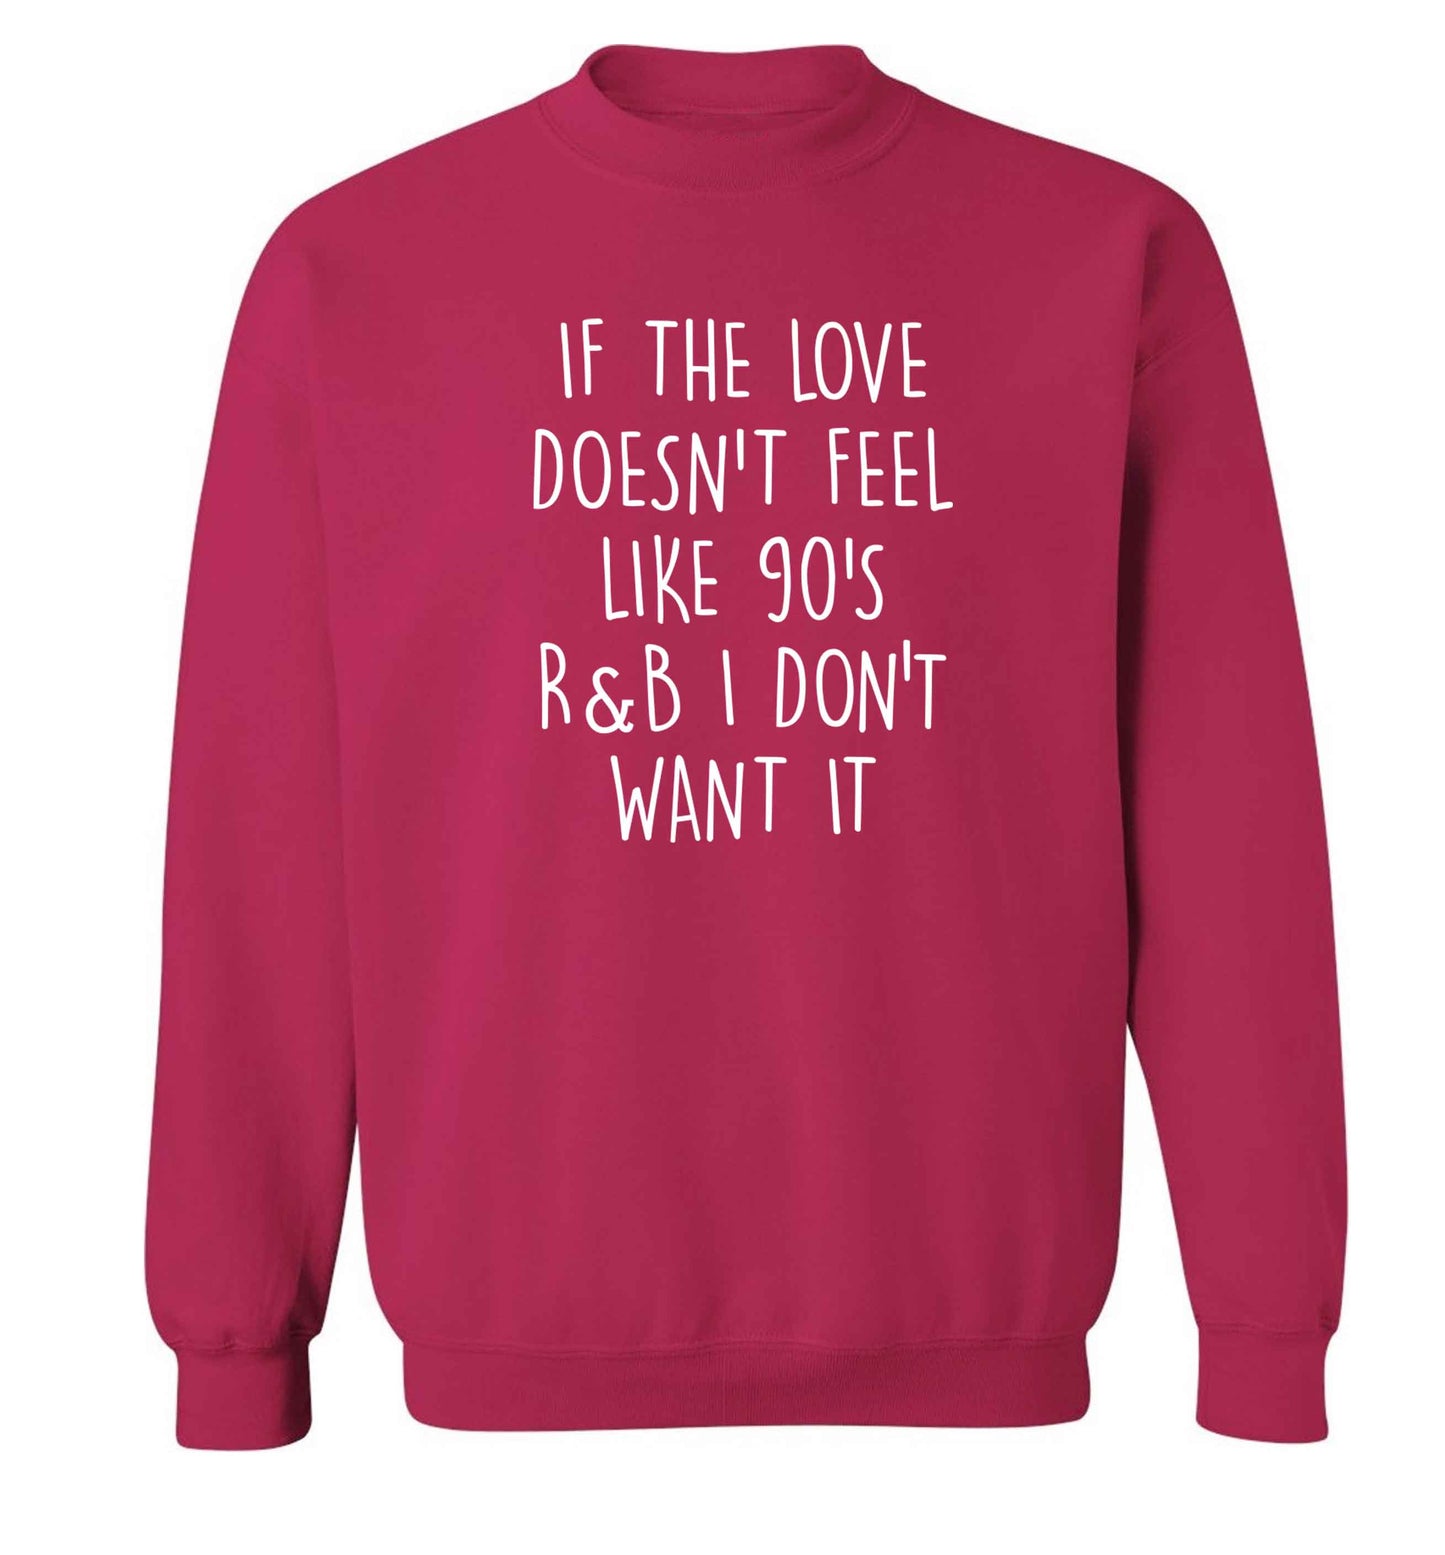 If the love doesn't feel like 90's r&b I don't want it adult's unisex pink sweater 2XL